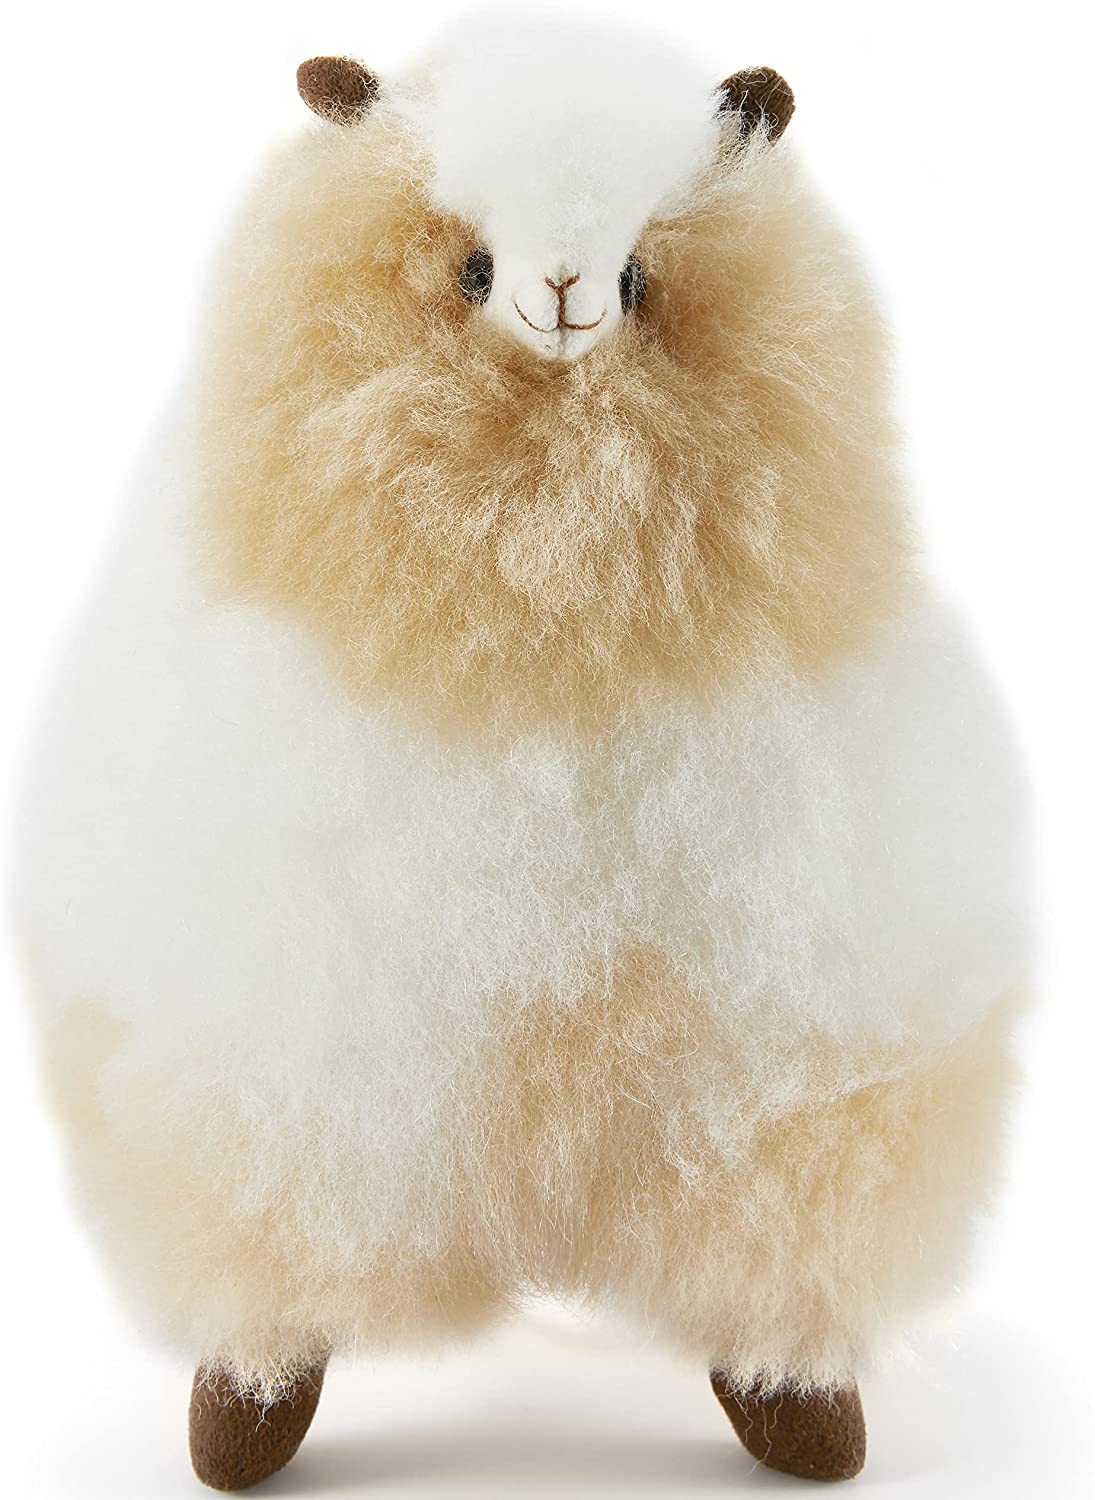 White Alpaca Plush Doll Handmade 100% Baby Alpaca Fur Soft and Cuddly 9 inch 